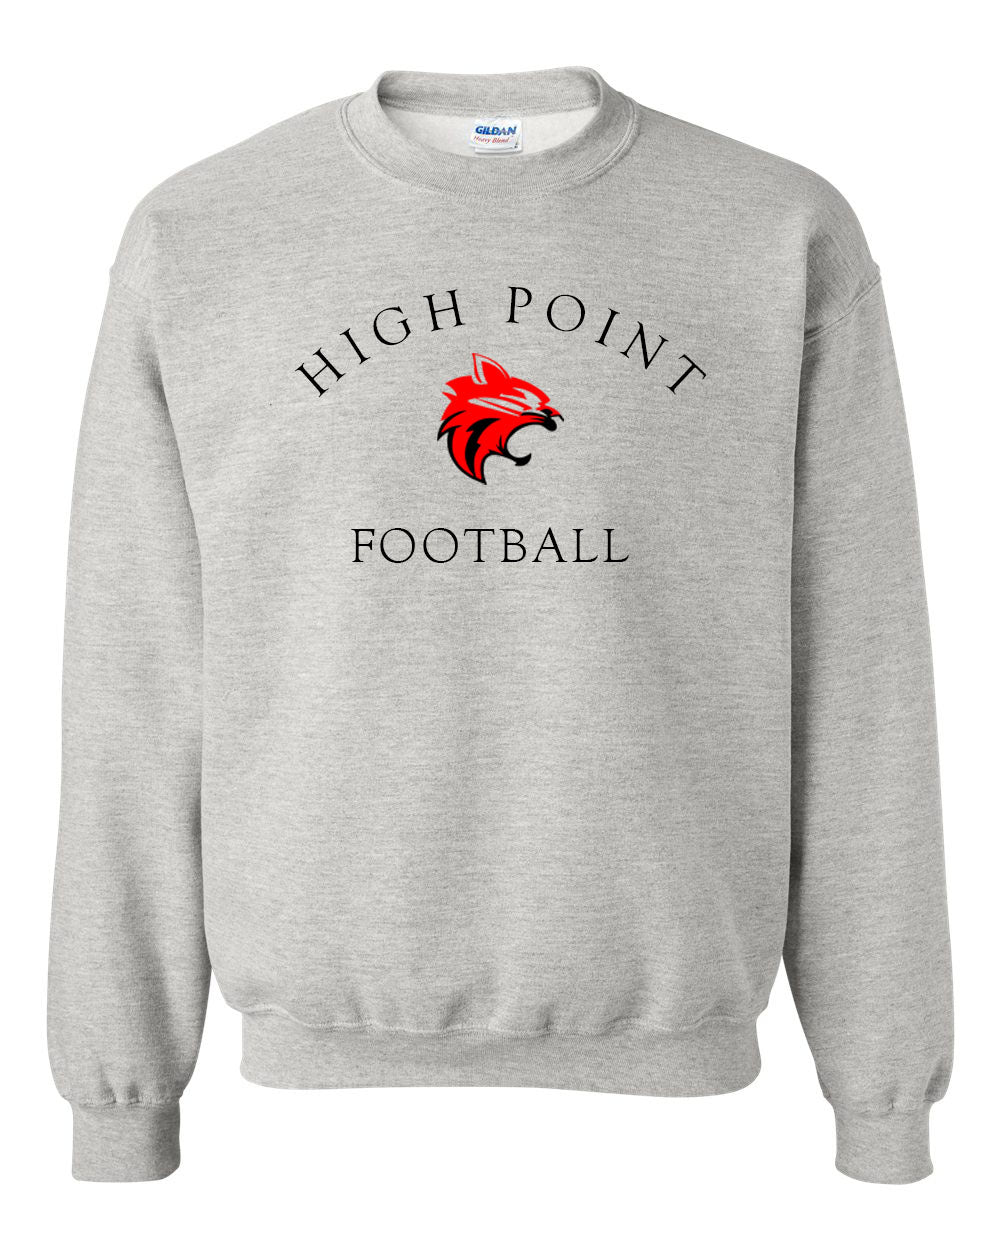 High Point Design 3 non hooded sweatshirt